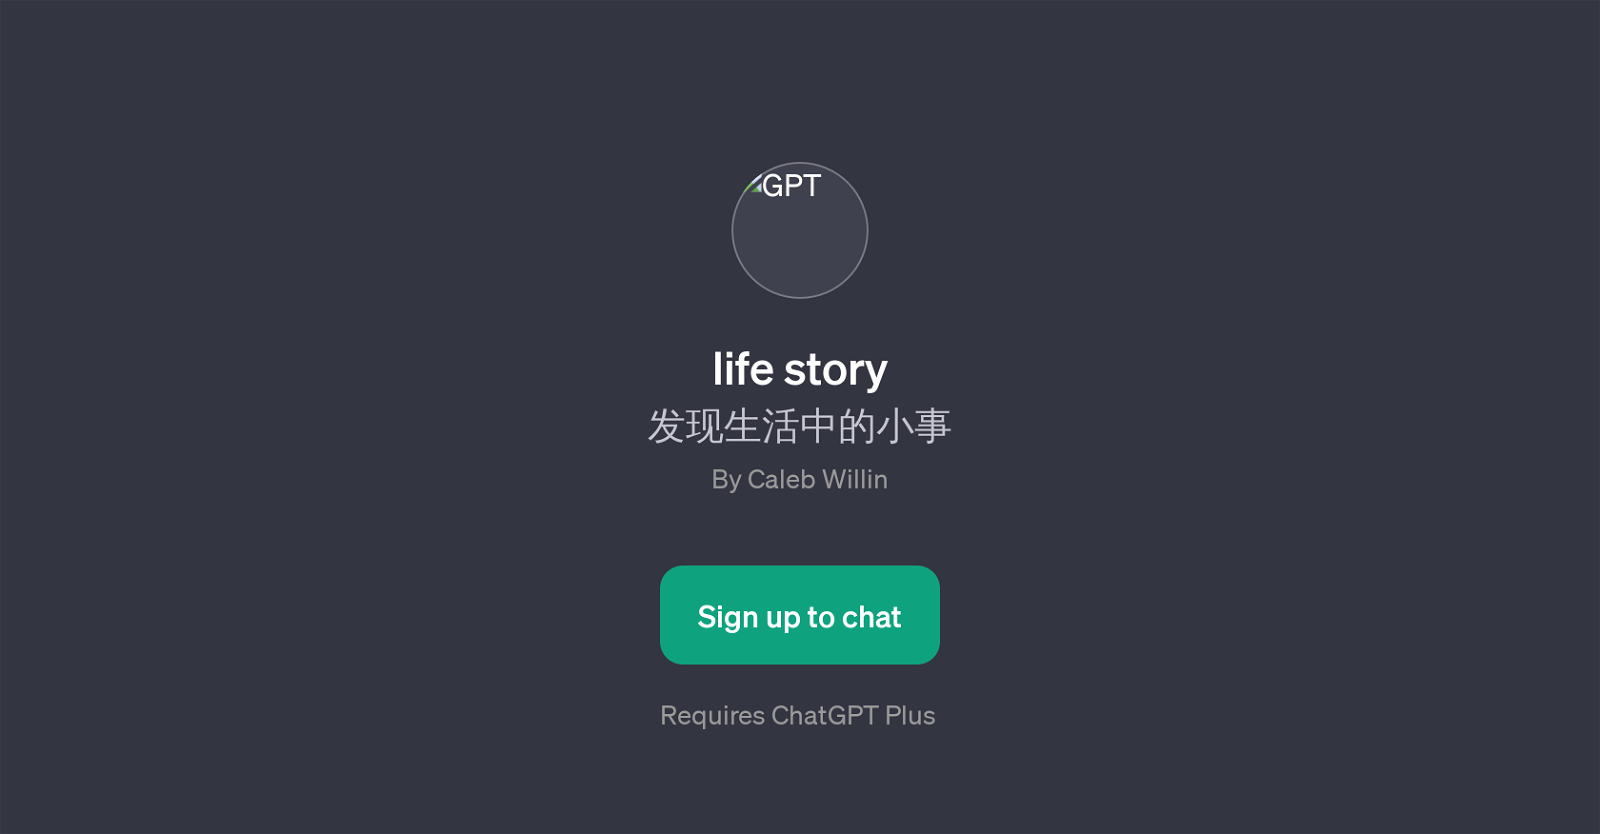 life story website